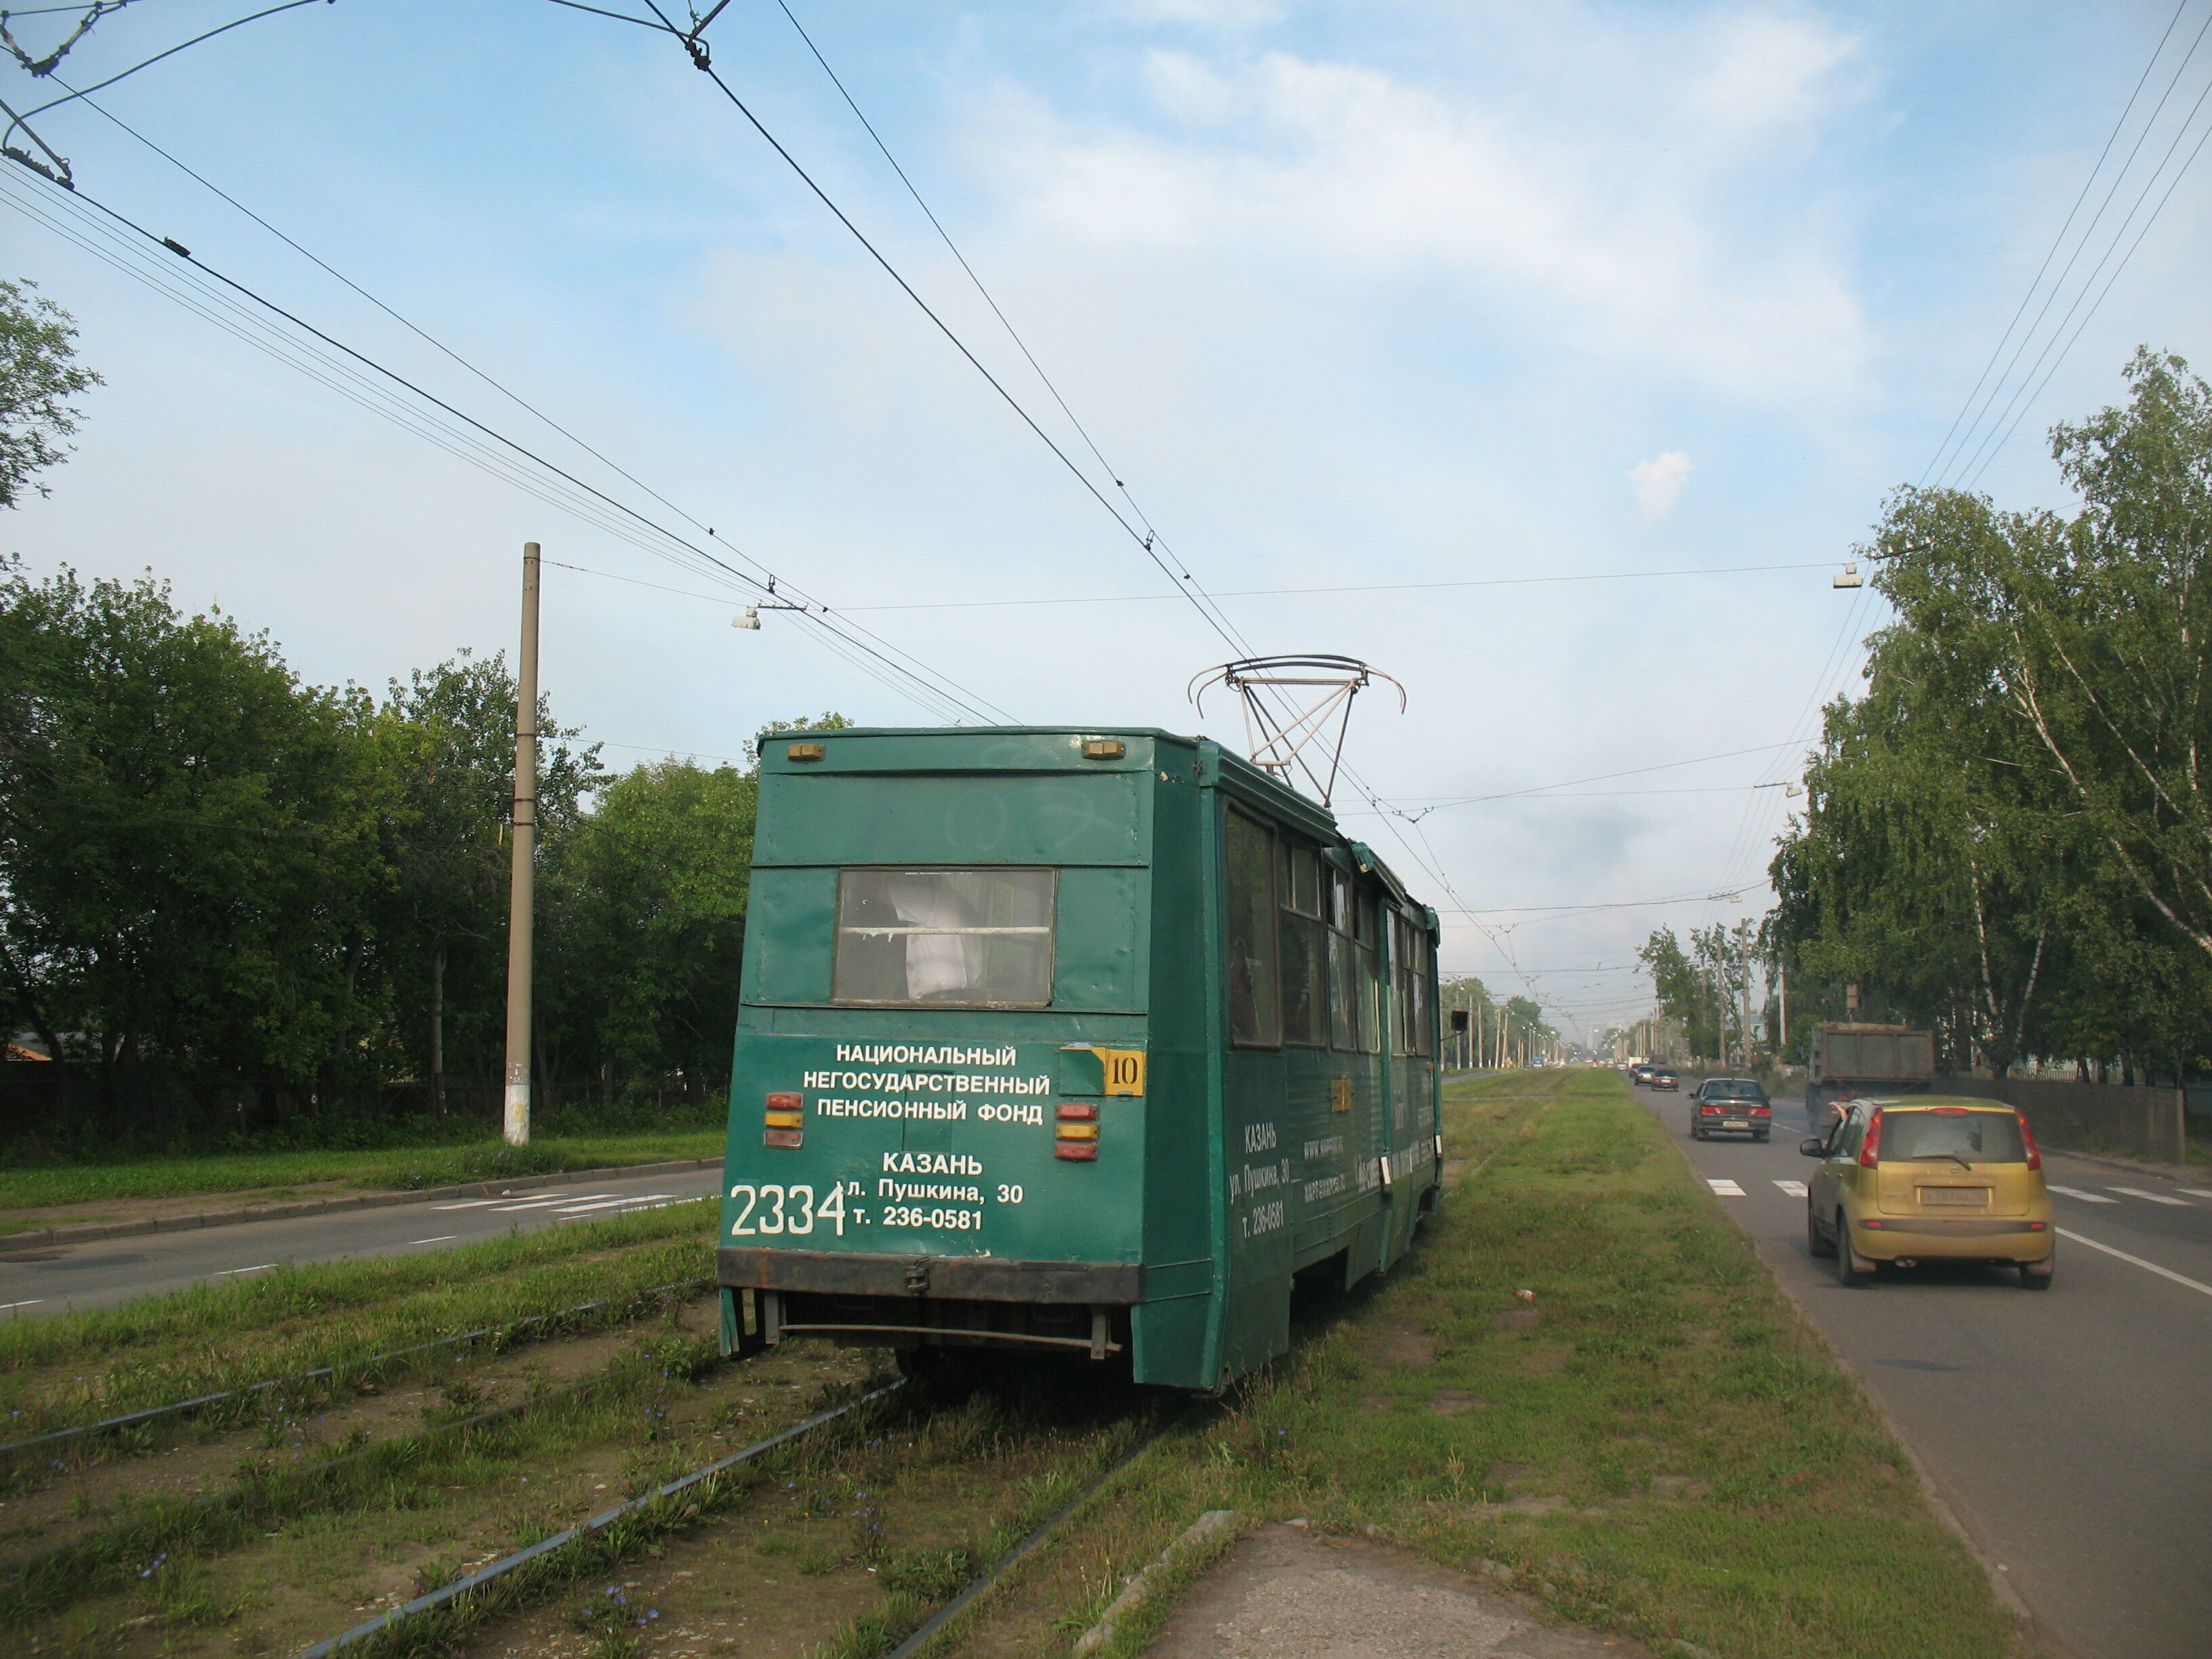 Трамвай 71-605 2334, маршрут 10, вид сзади